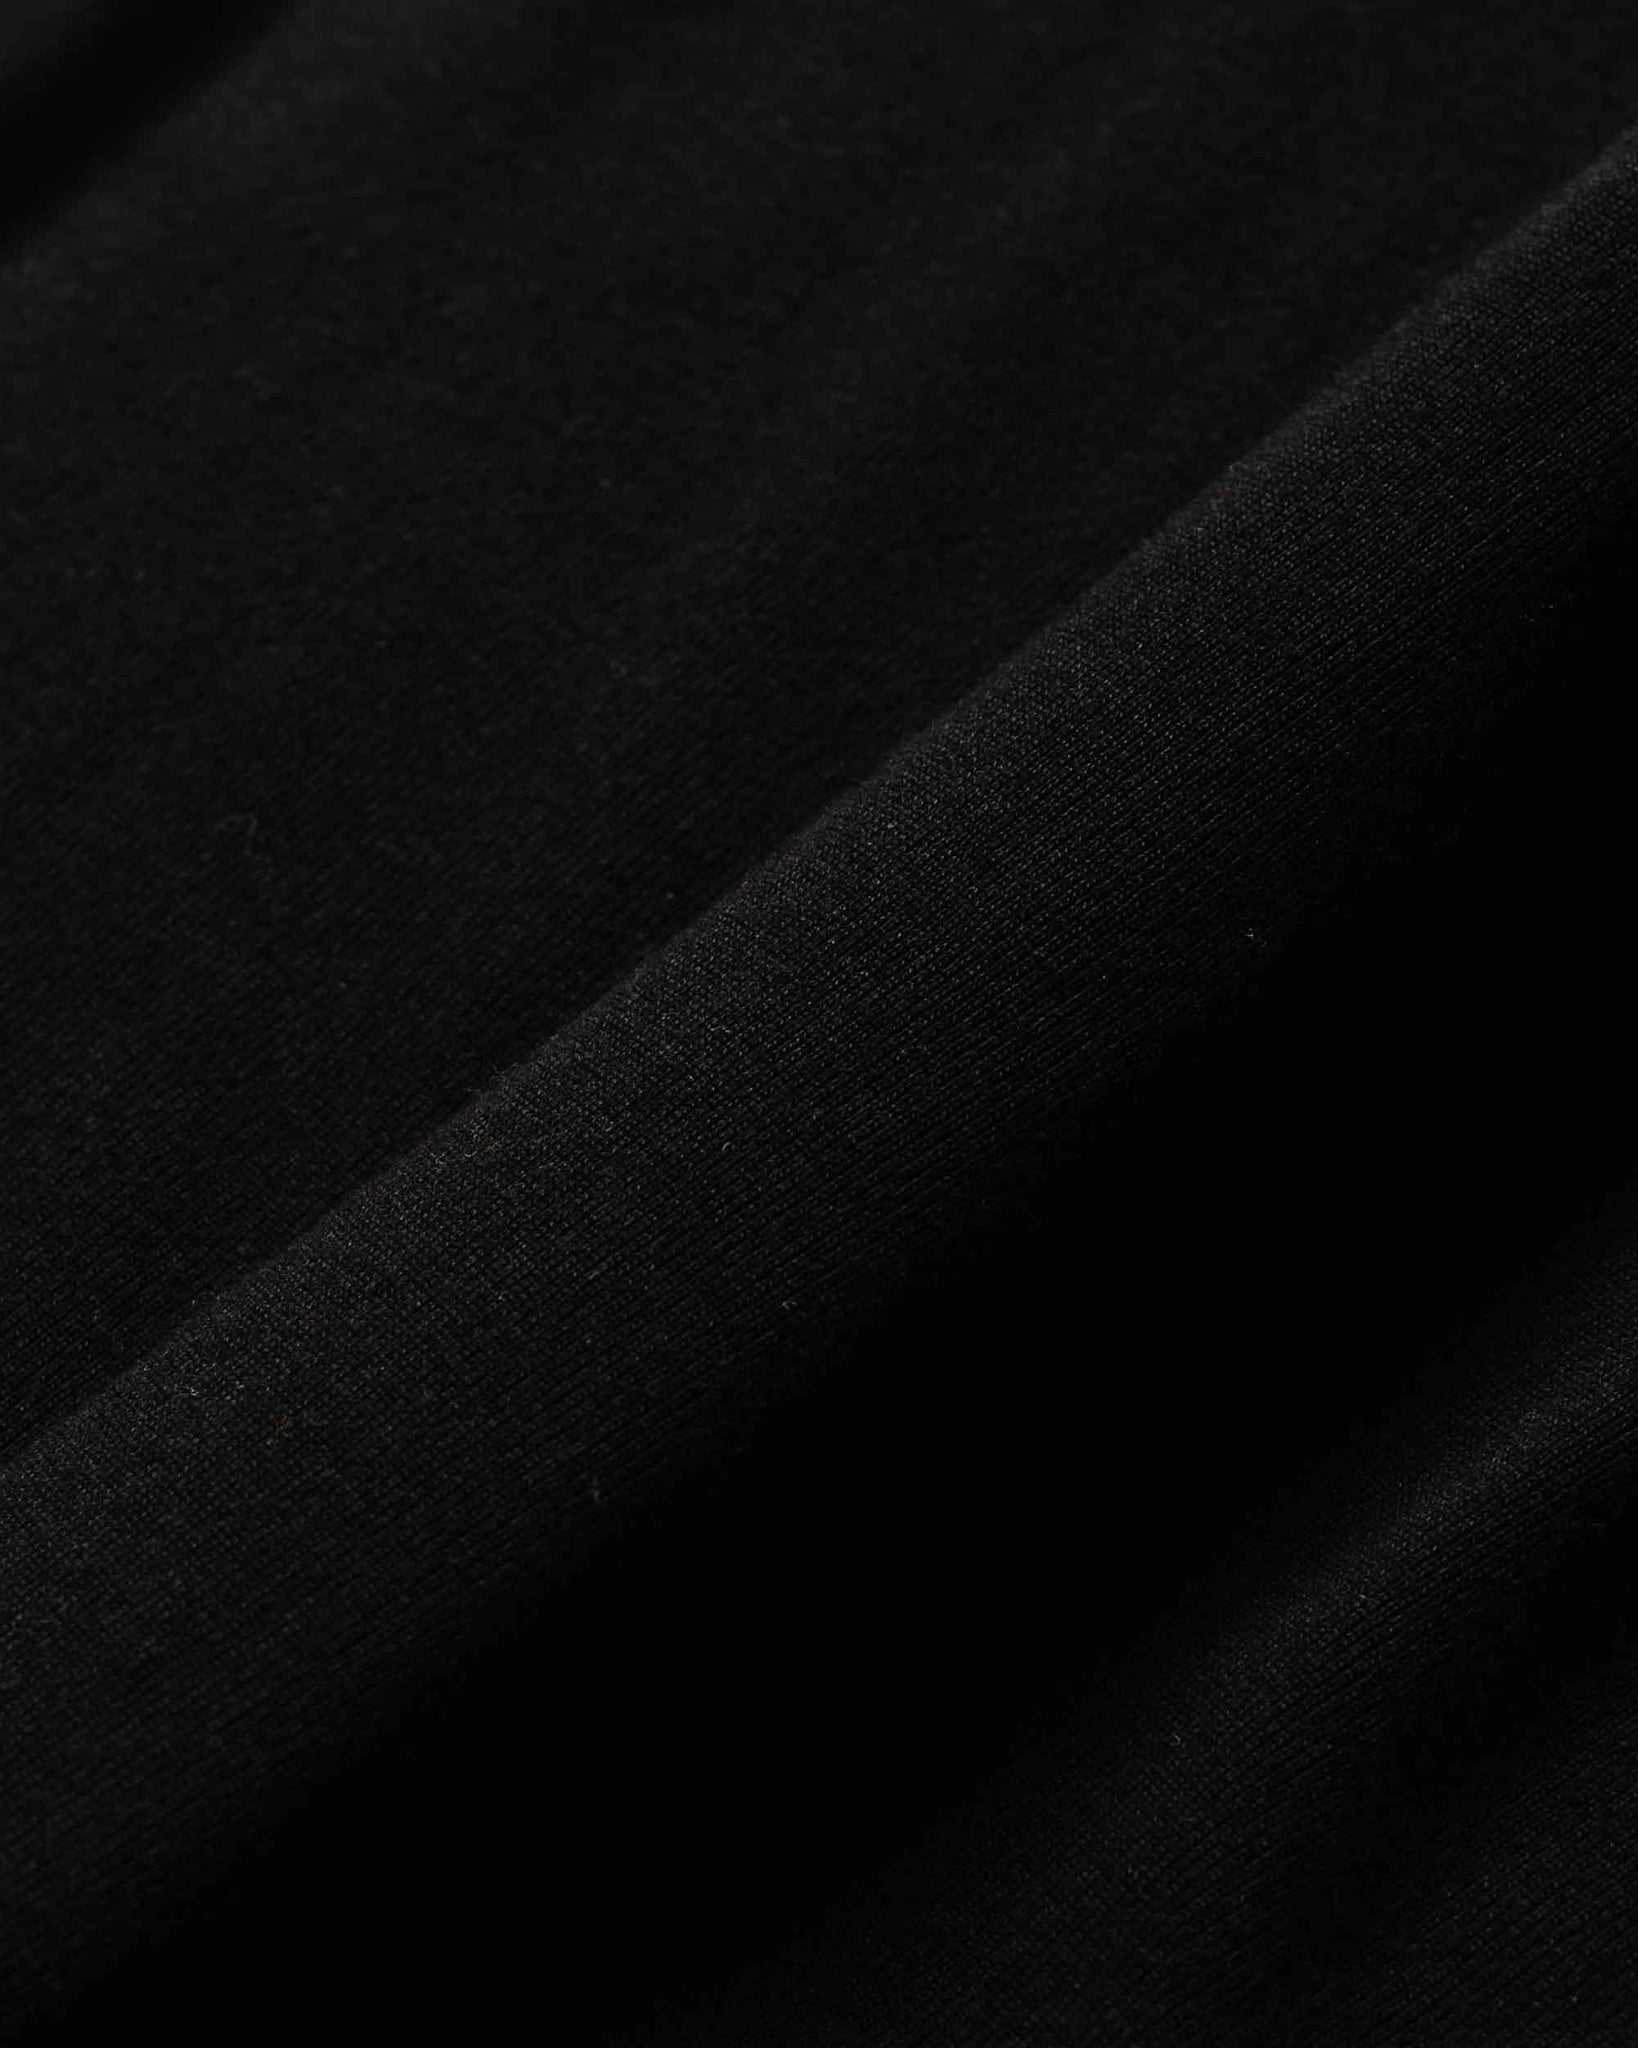 The Real McCoy's MC23022 Union Henley Undershirt S/S Black Fabric